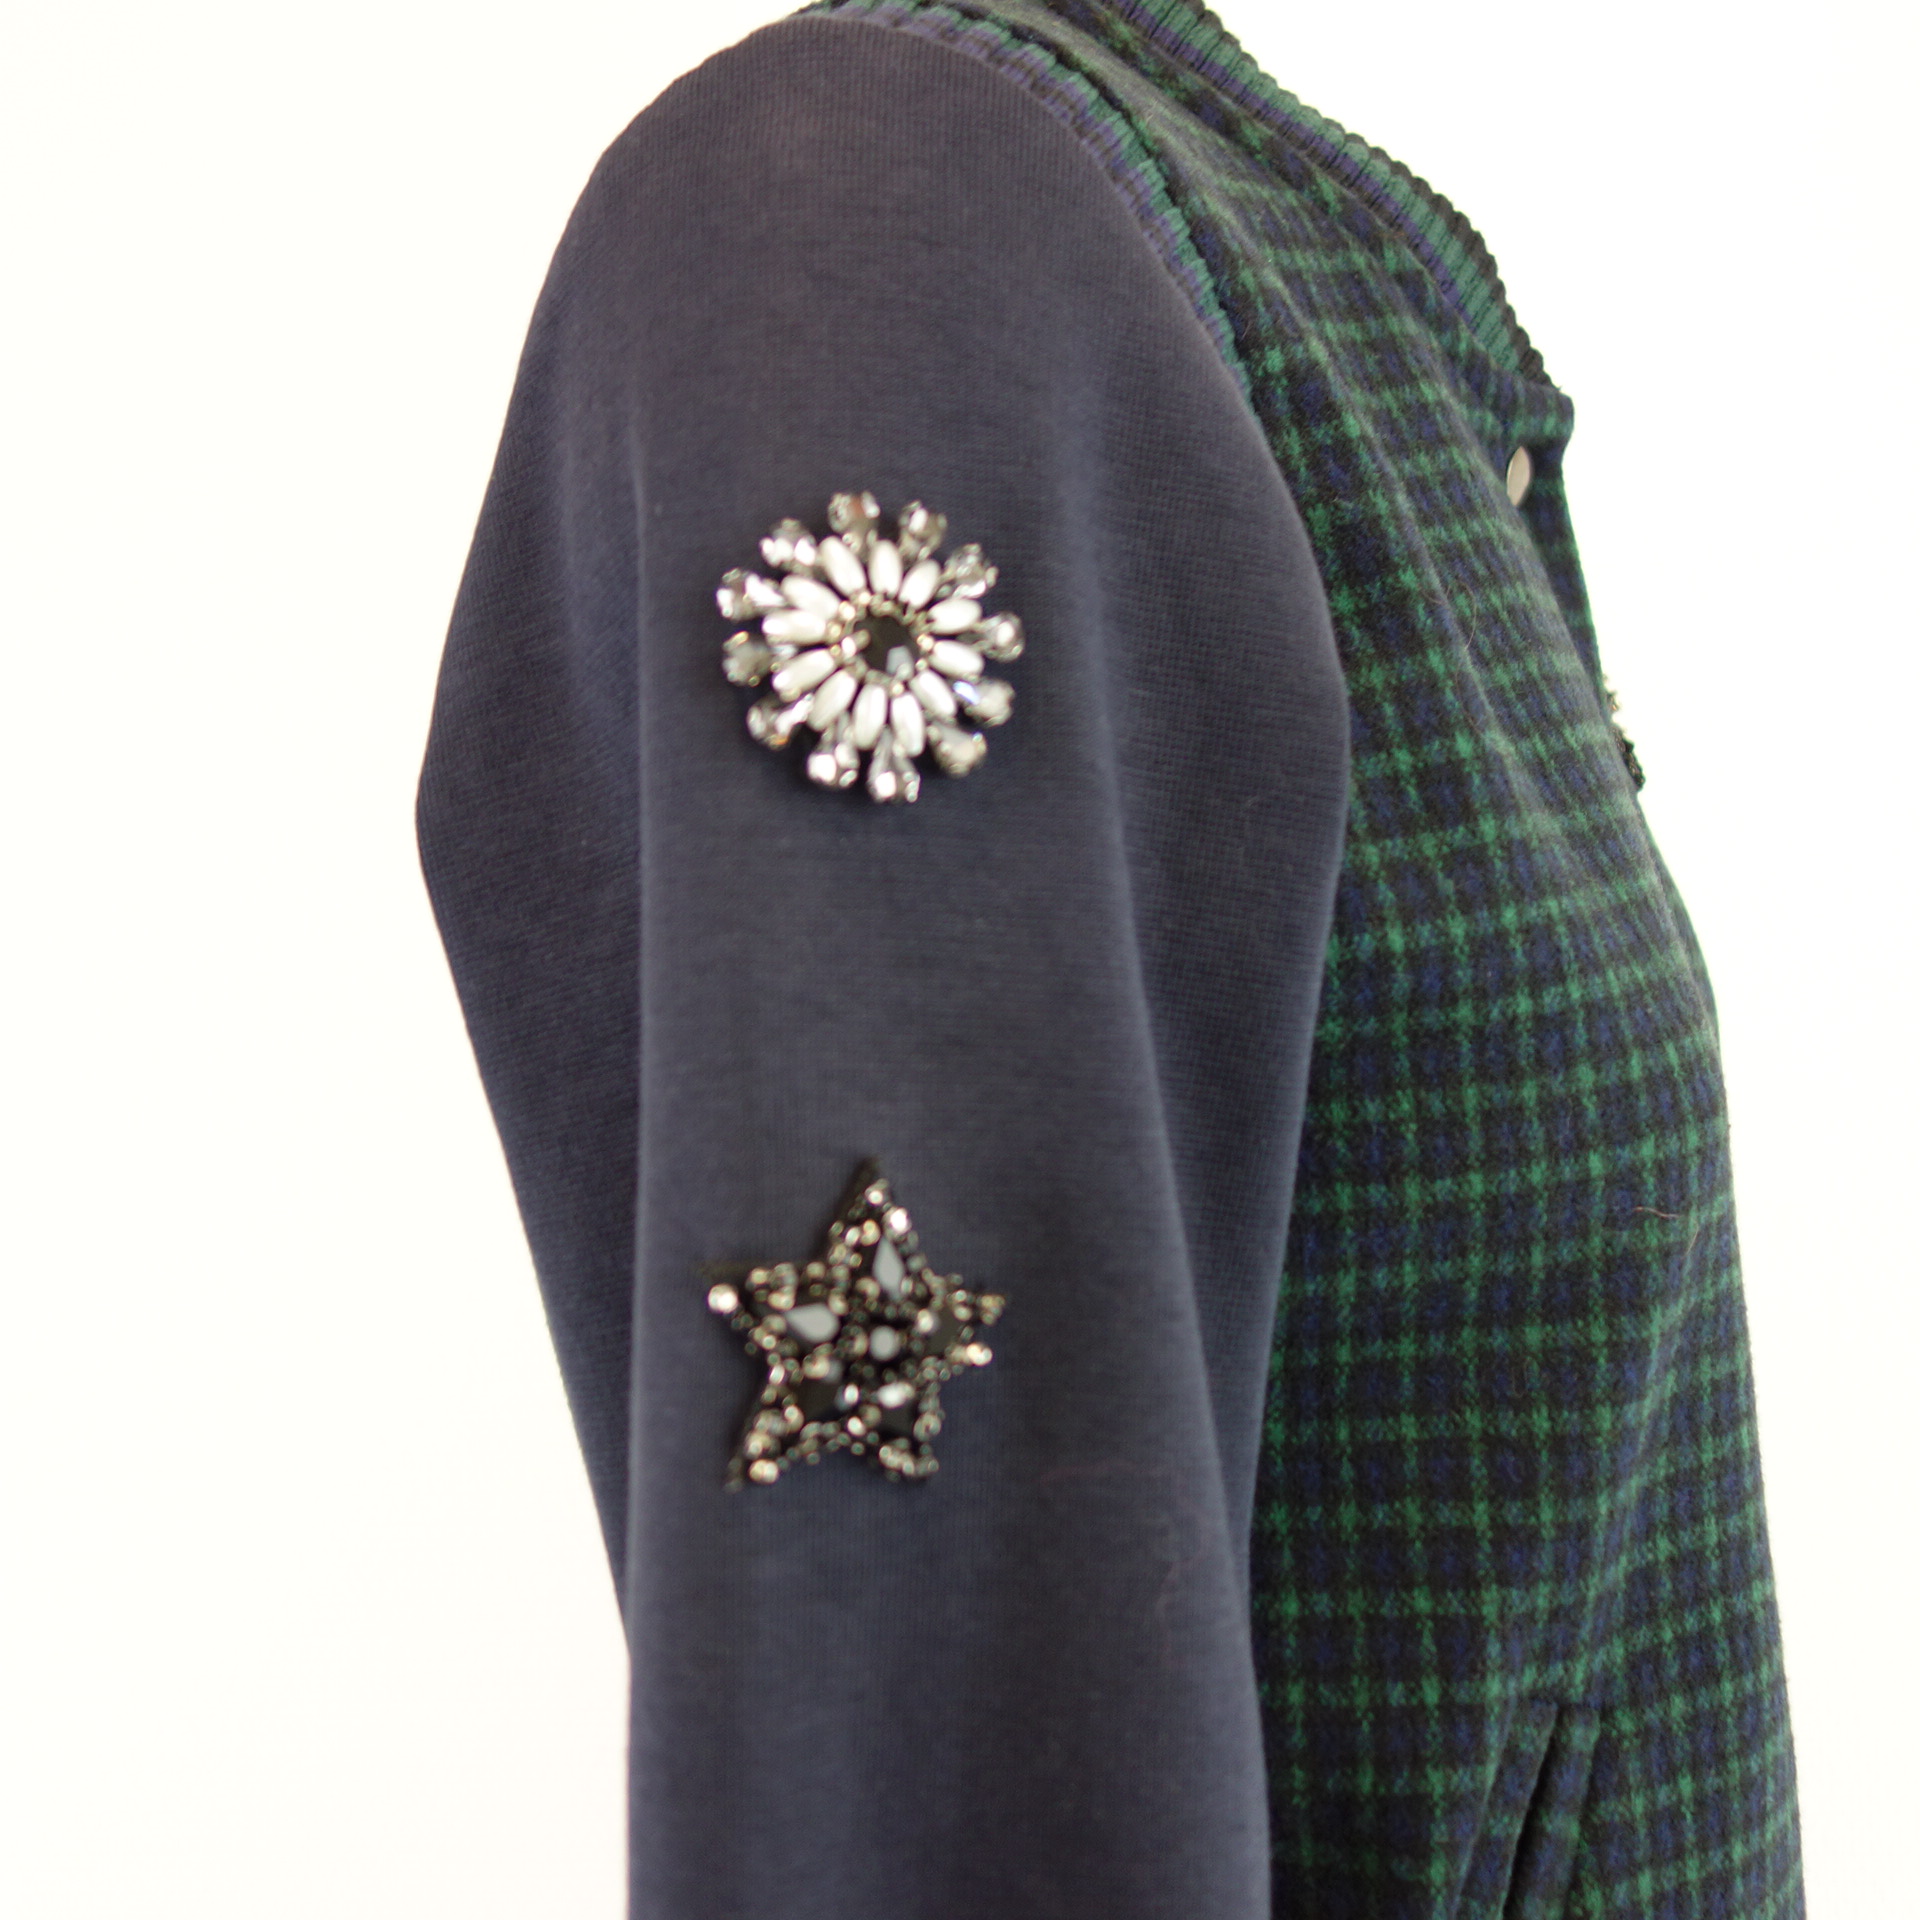 RICH & ROYAL Damen Jacke Damenjacke Blouson College Style Grün Blau Kariert